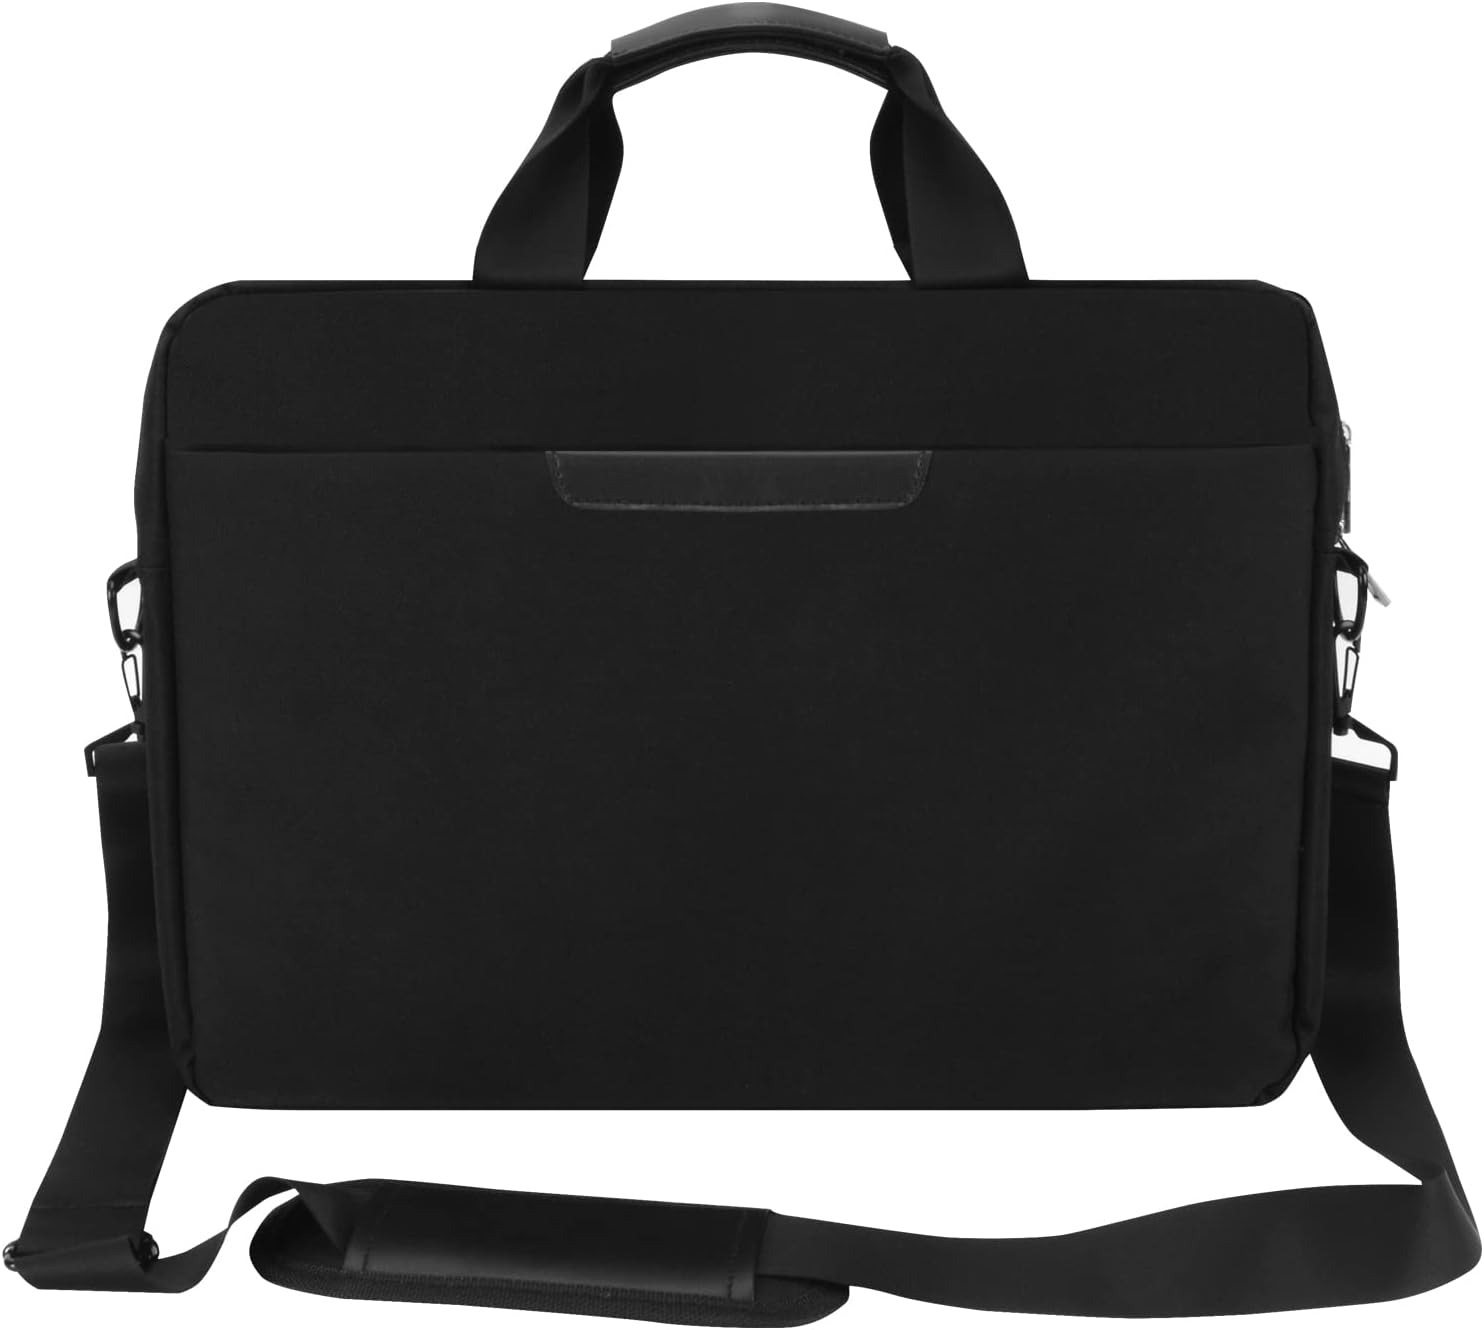 Premium Black,17.3-18.4 Inch Laptop Briefcase with Cross-Body Shoulder, Laptop C